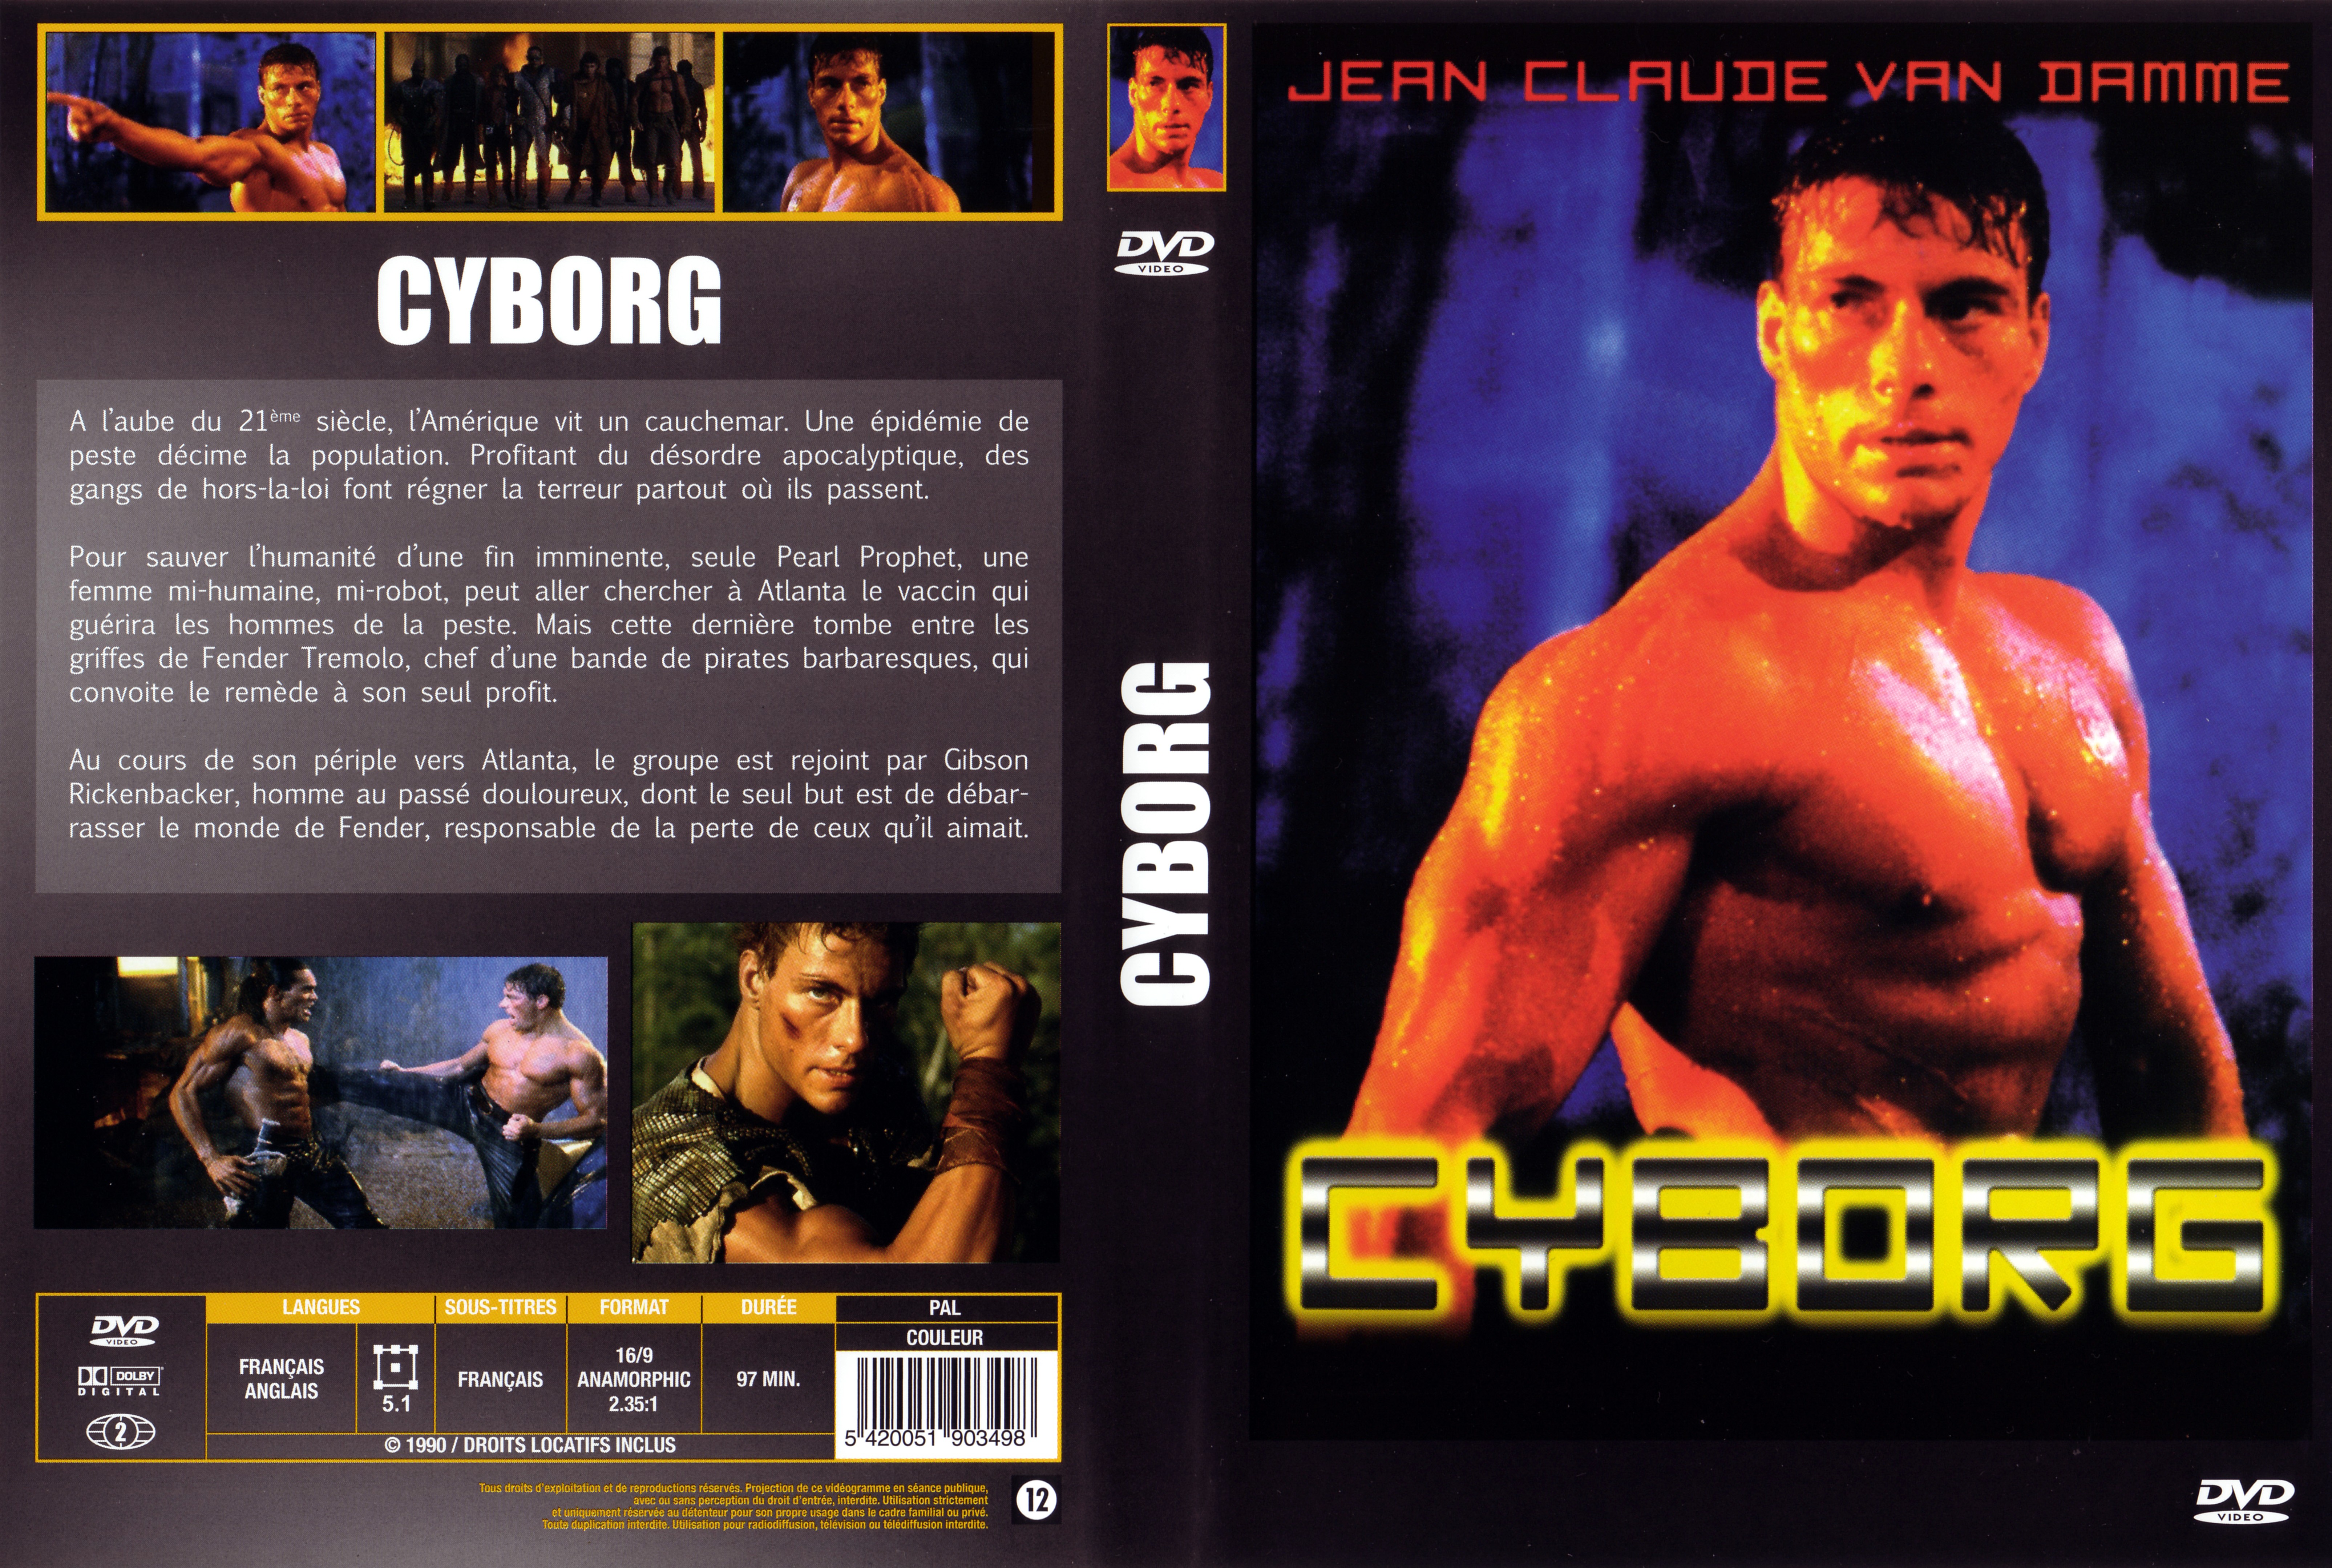 Jaquette DVD Cyborg v3